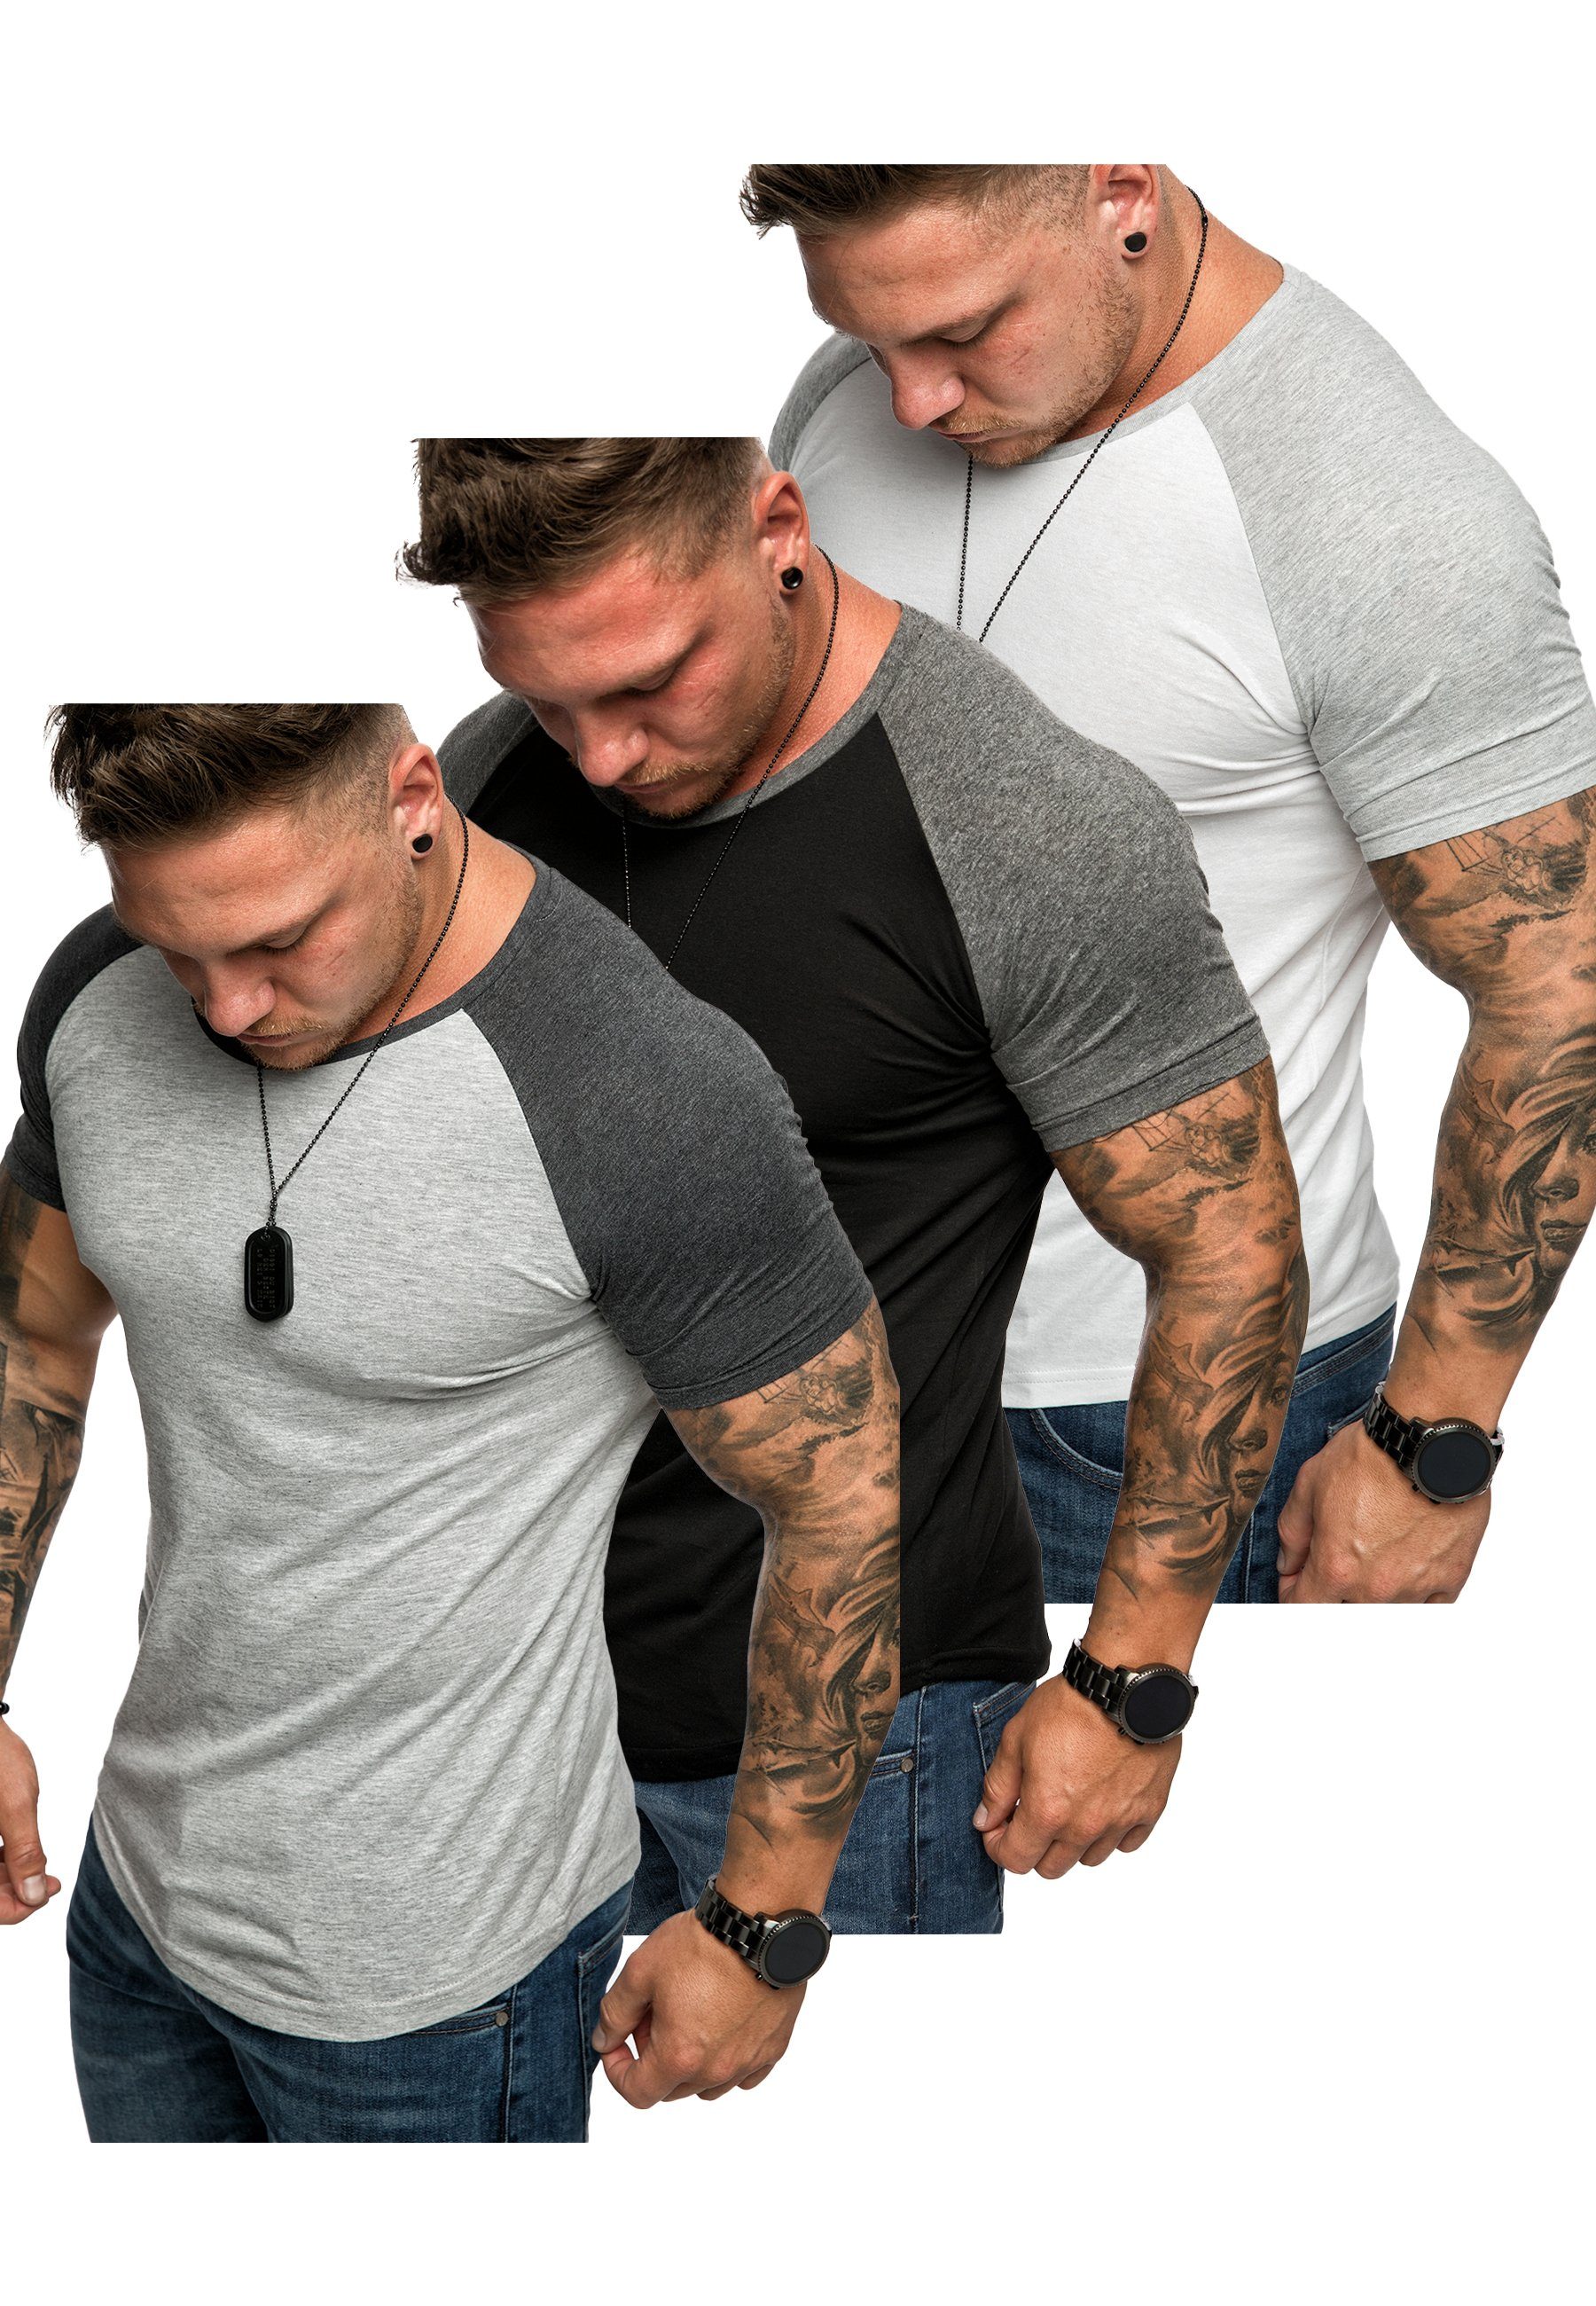 Weiß/Grau) Oversize T-Shirt Amaci&Sons + (3er-Pack) 3er-Pack 3. Herren OMAHA T-Shirts (Grau/Anthrazit Schwarz/Anthrazit T-Shirt Raglan Basic + Kontrast